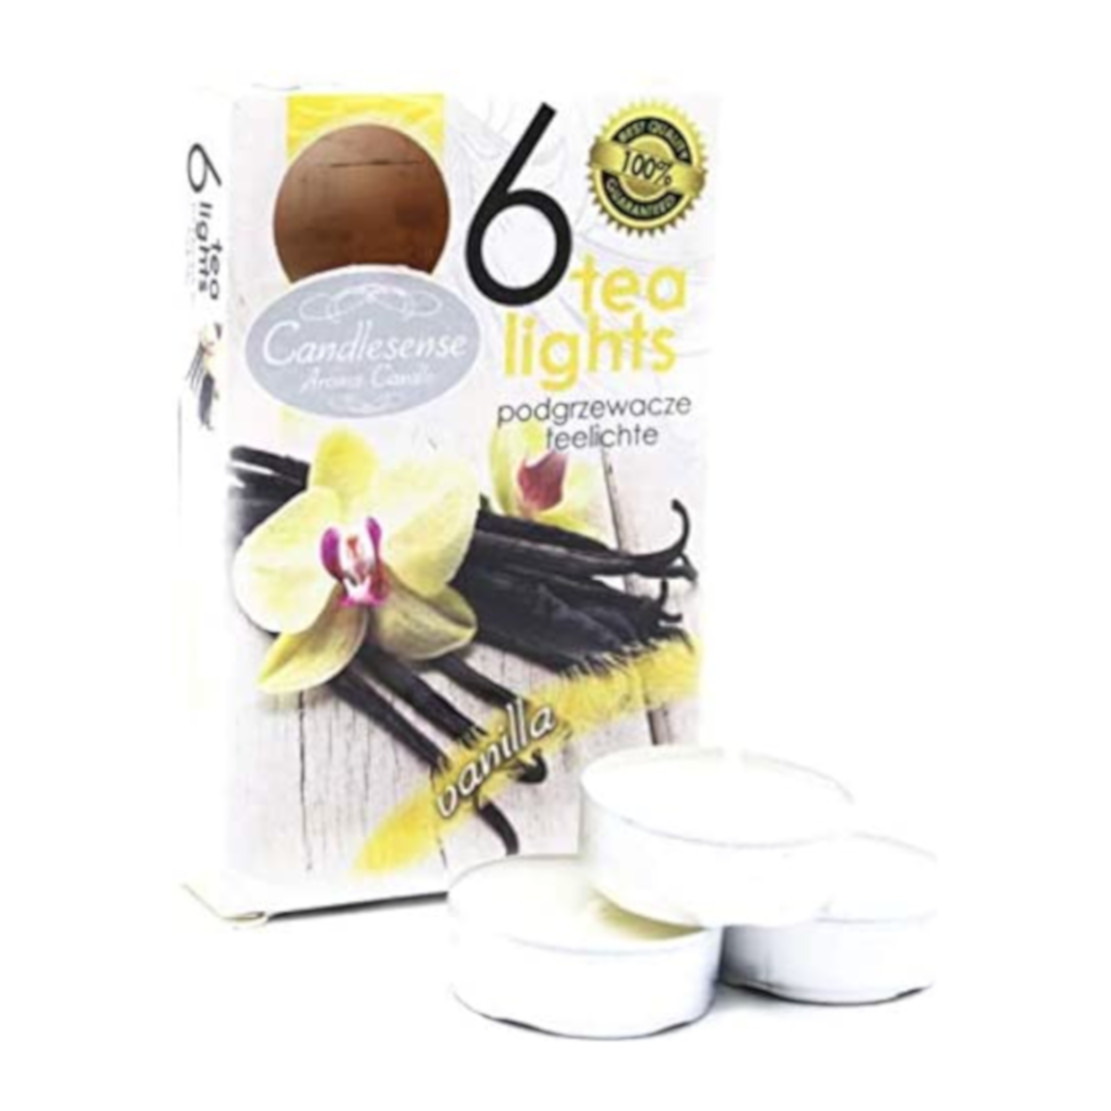 Candlesense Vanilla Scented Tealights - Set of 6